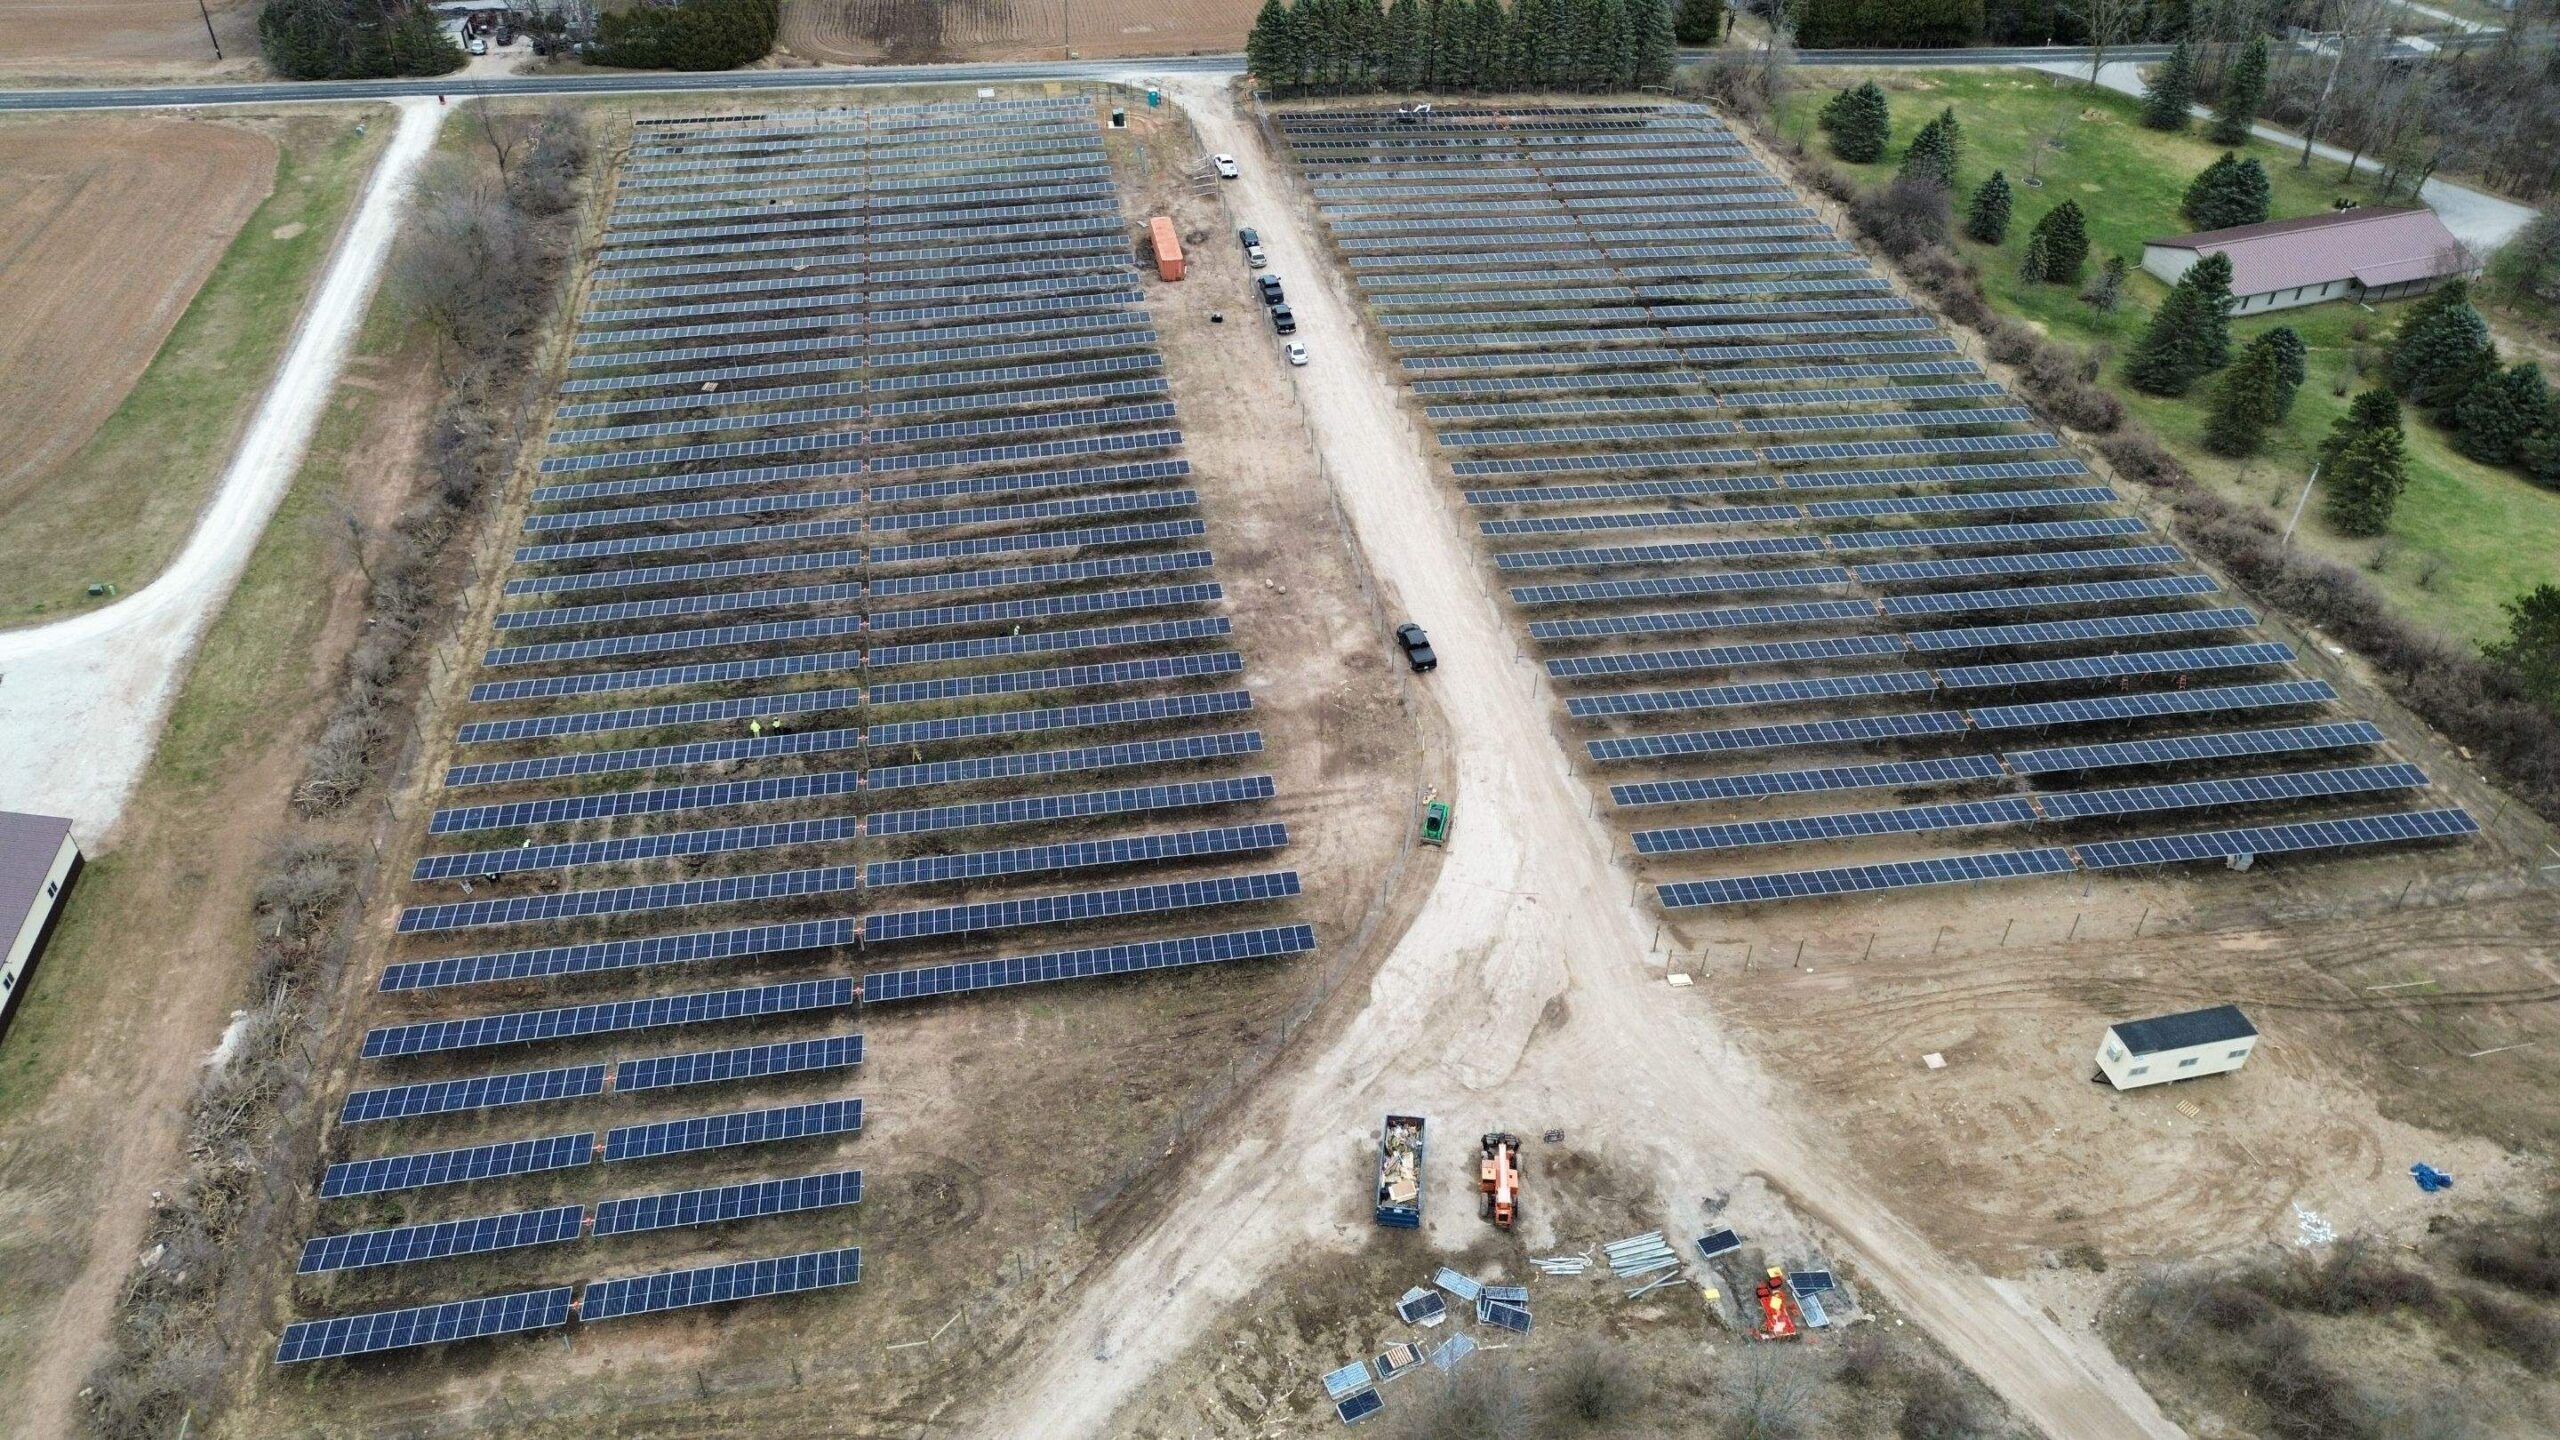 solar panels in a community solar garden